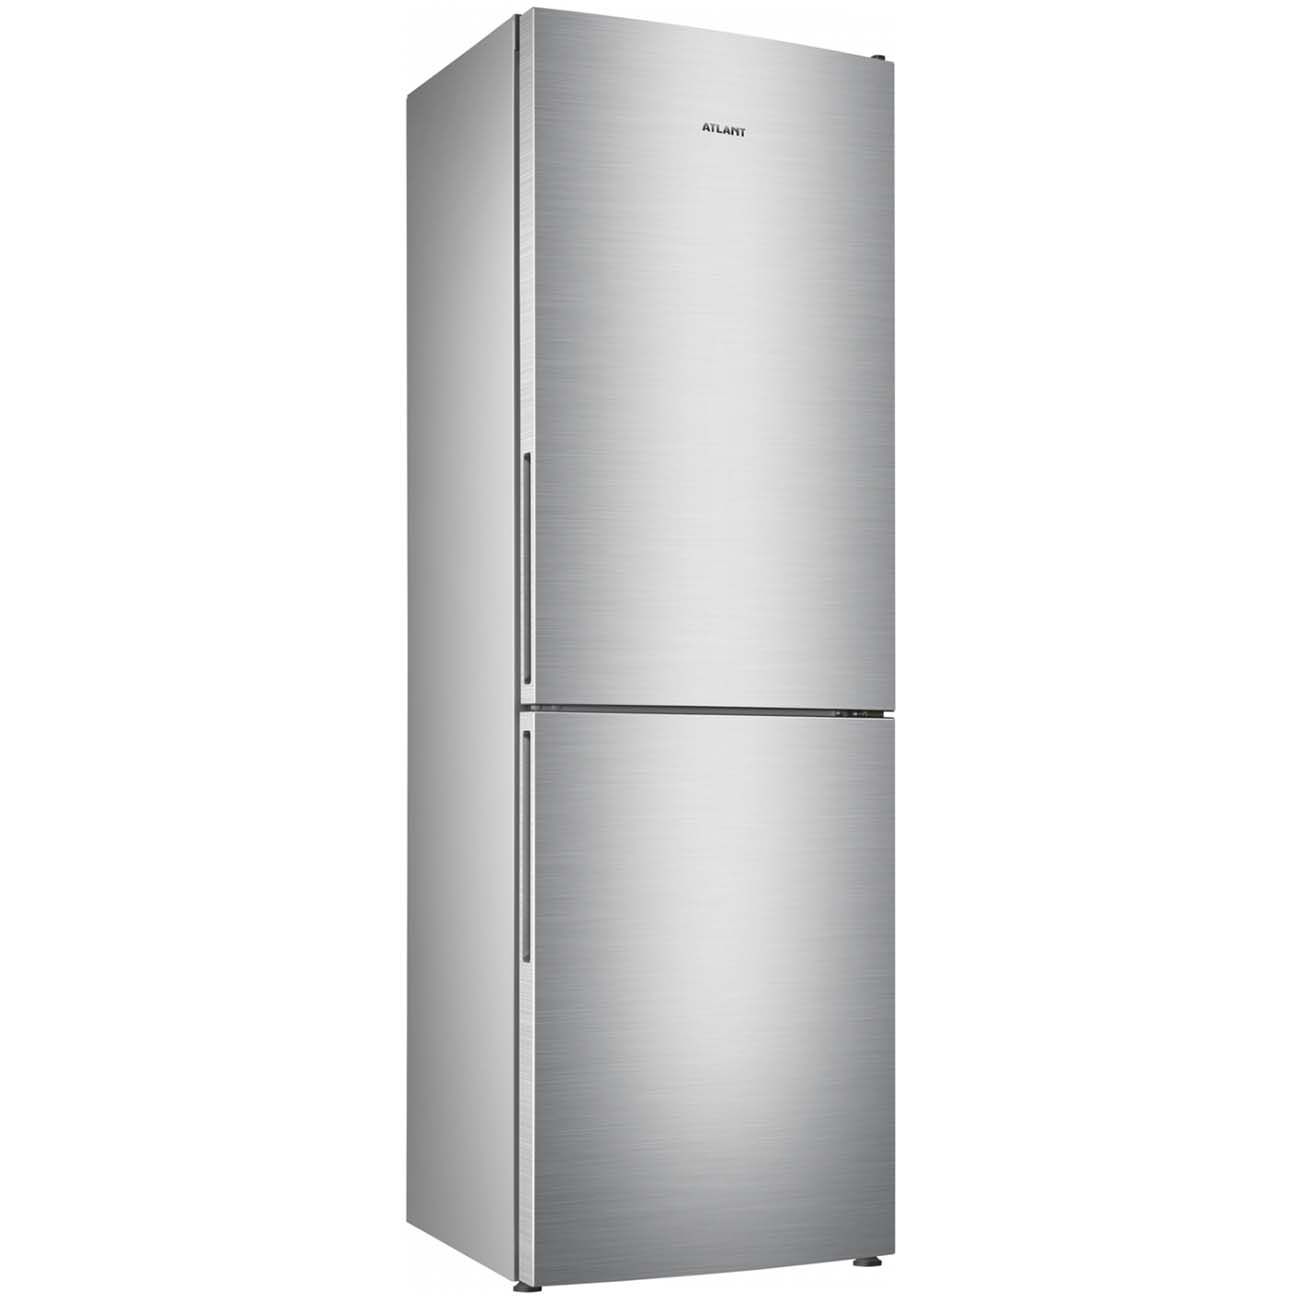 М видео атлант купить. Холодильник XM 6026-080 ATLANT. Холодильник ATLANT хм 4621-141. Холодильник Атлант 4624-141. Холодильник Атлант хм 4625-141.